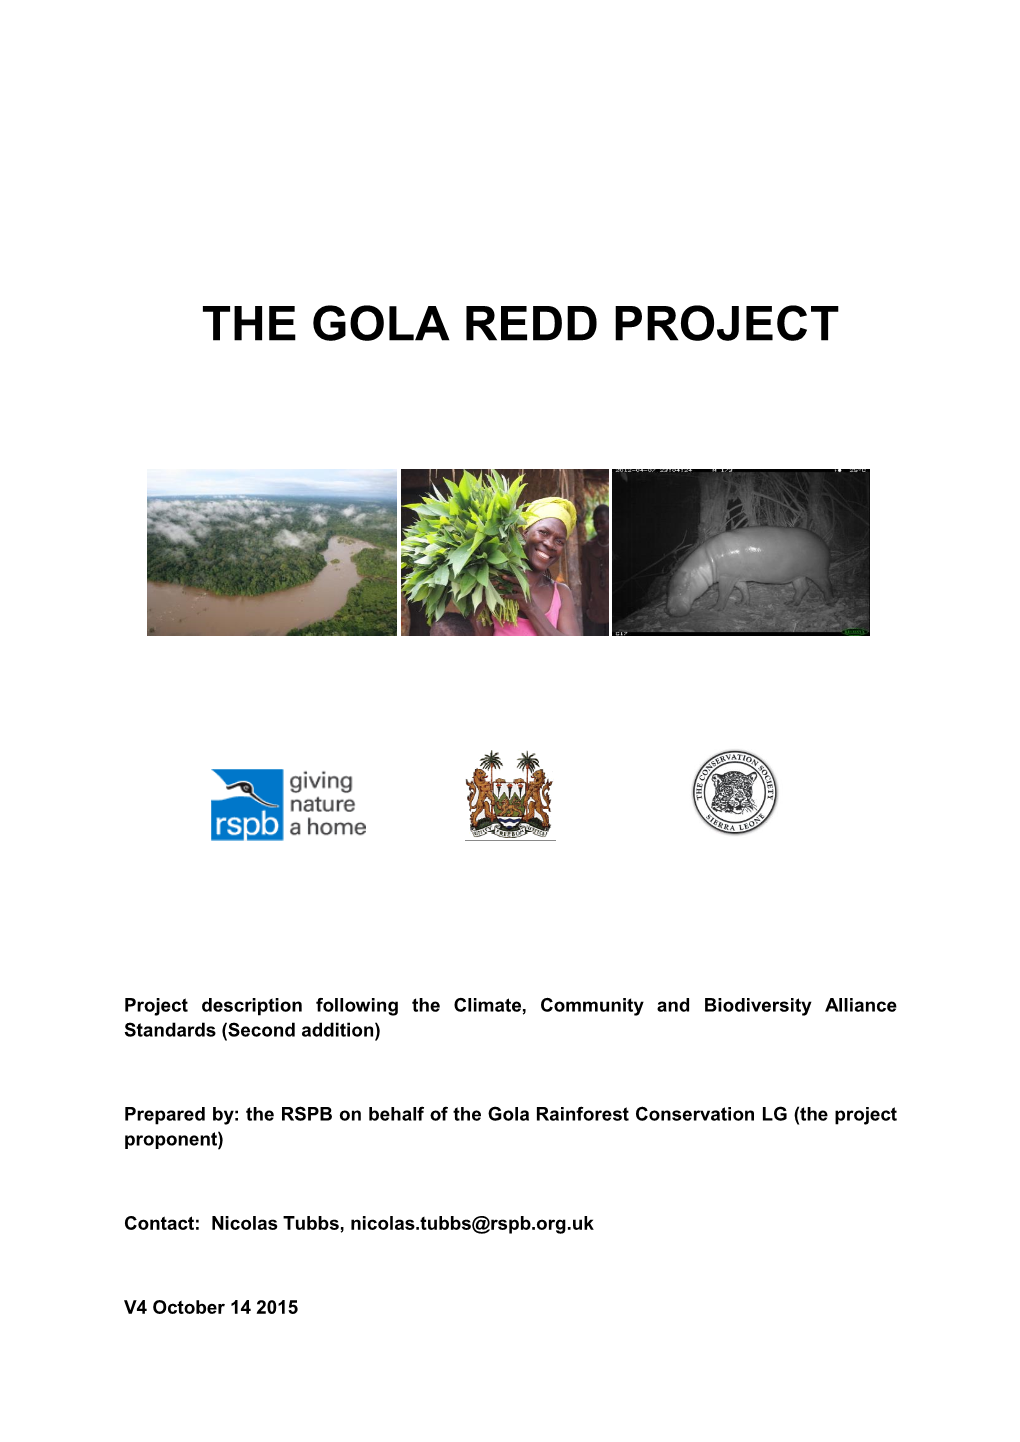 The Gola Redd Project